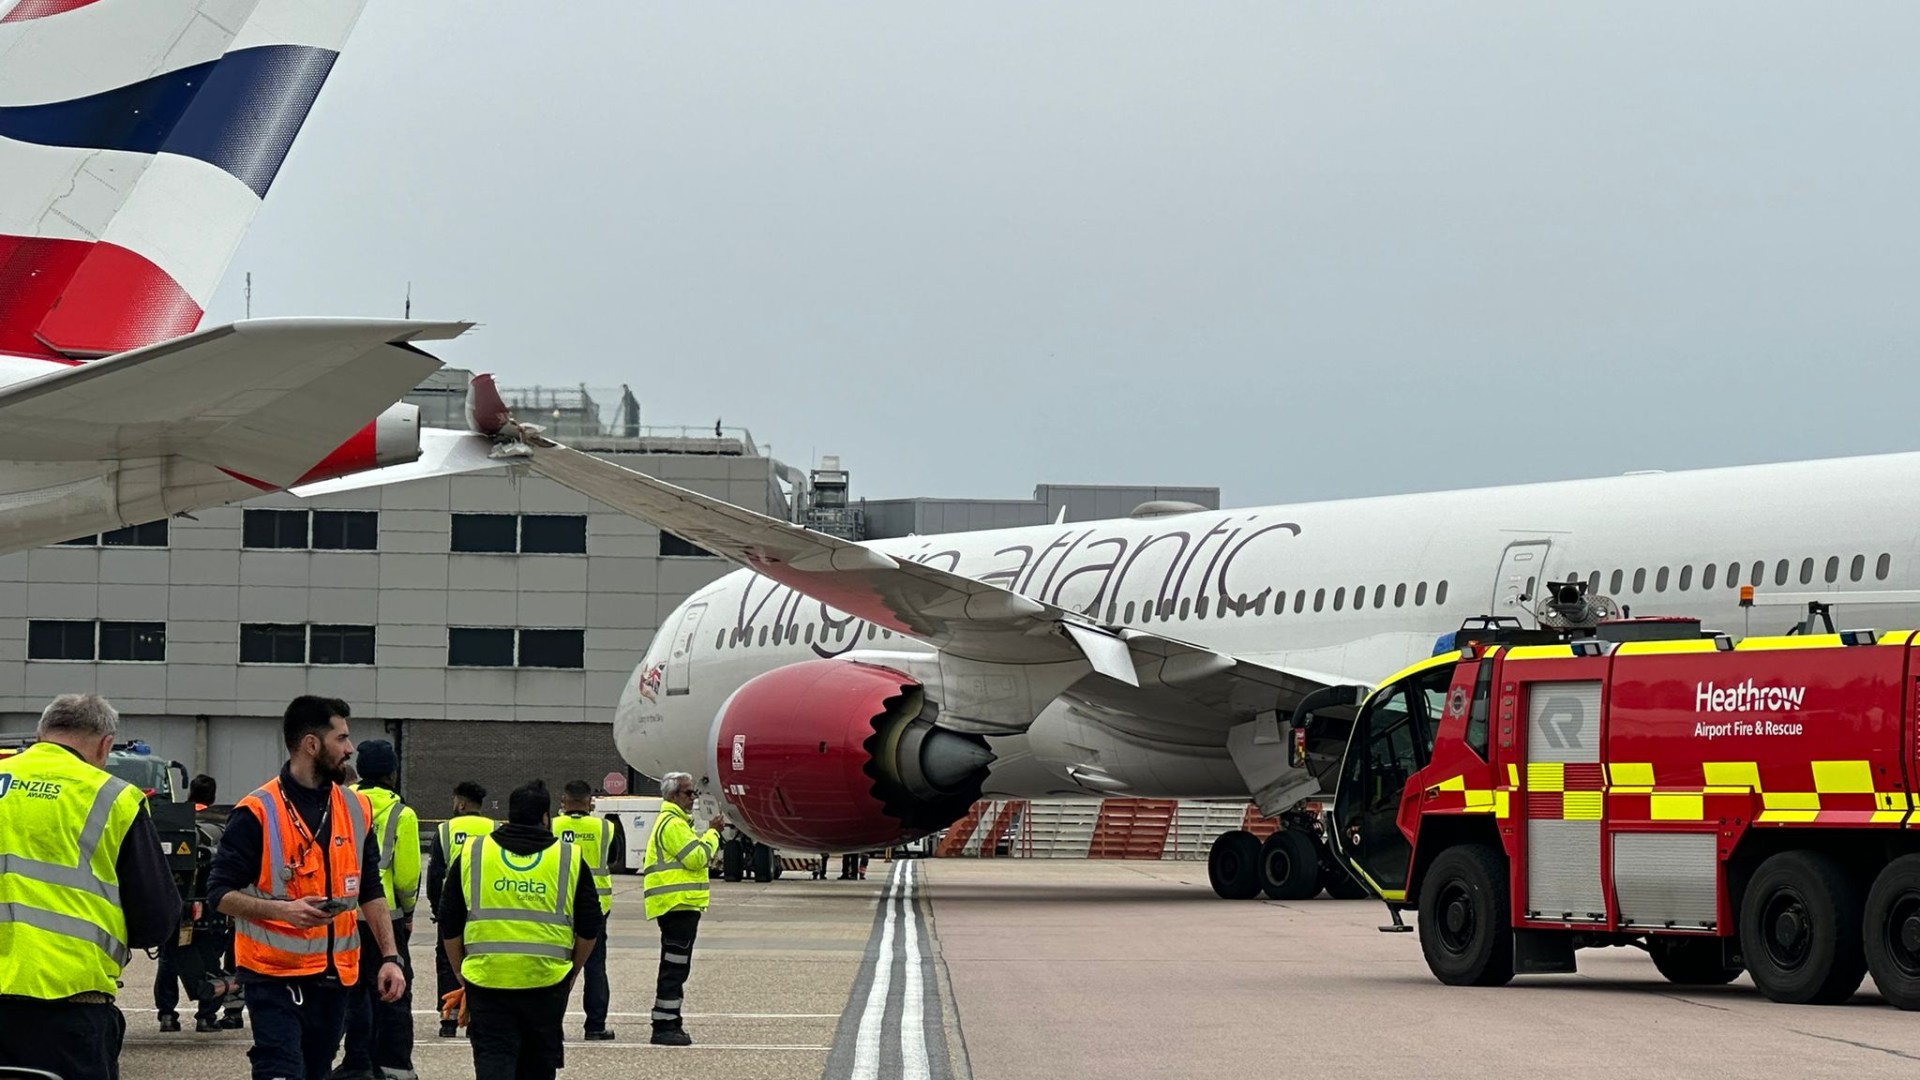 Two passenger planes crash on Heathrow tarmac sparking massive emergency response [Video]